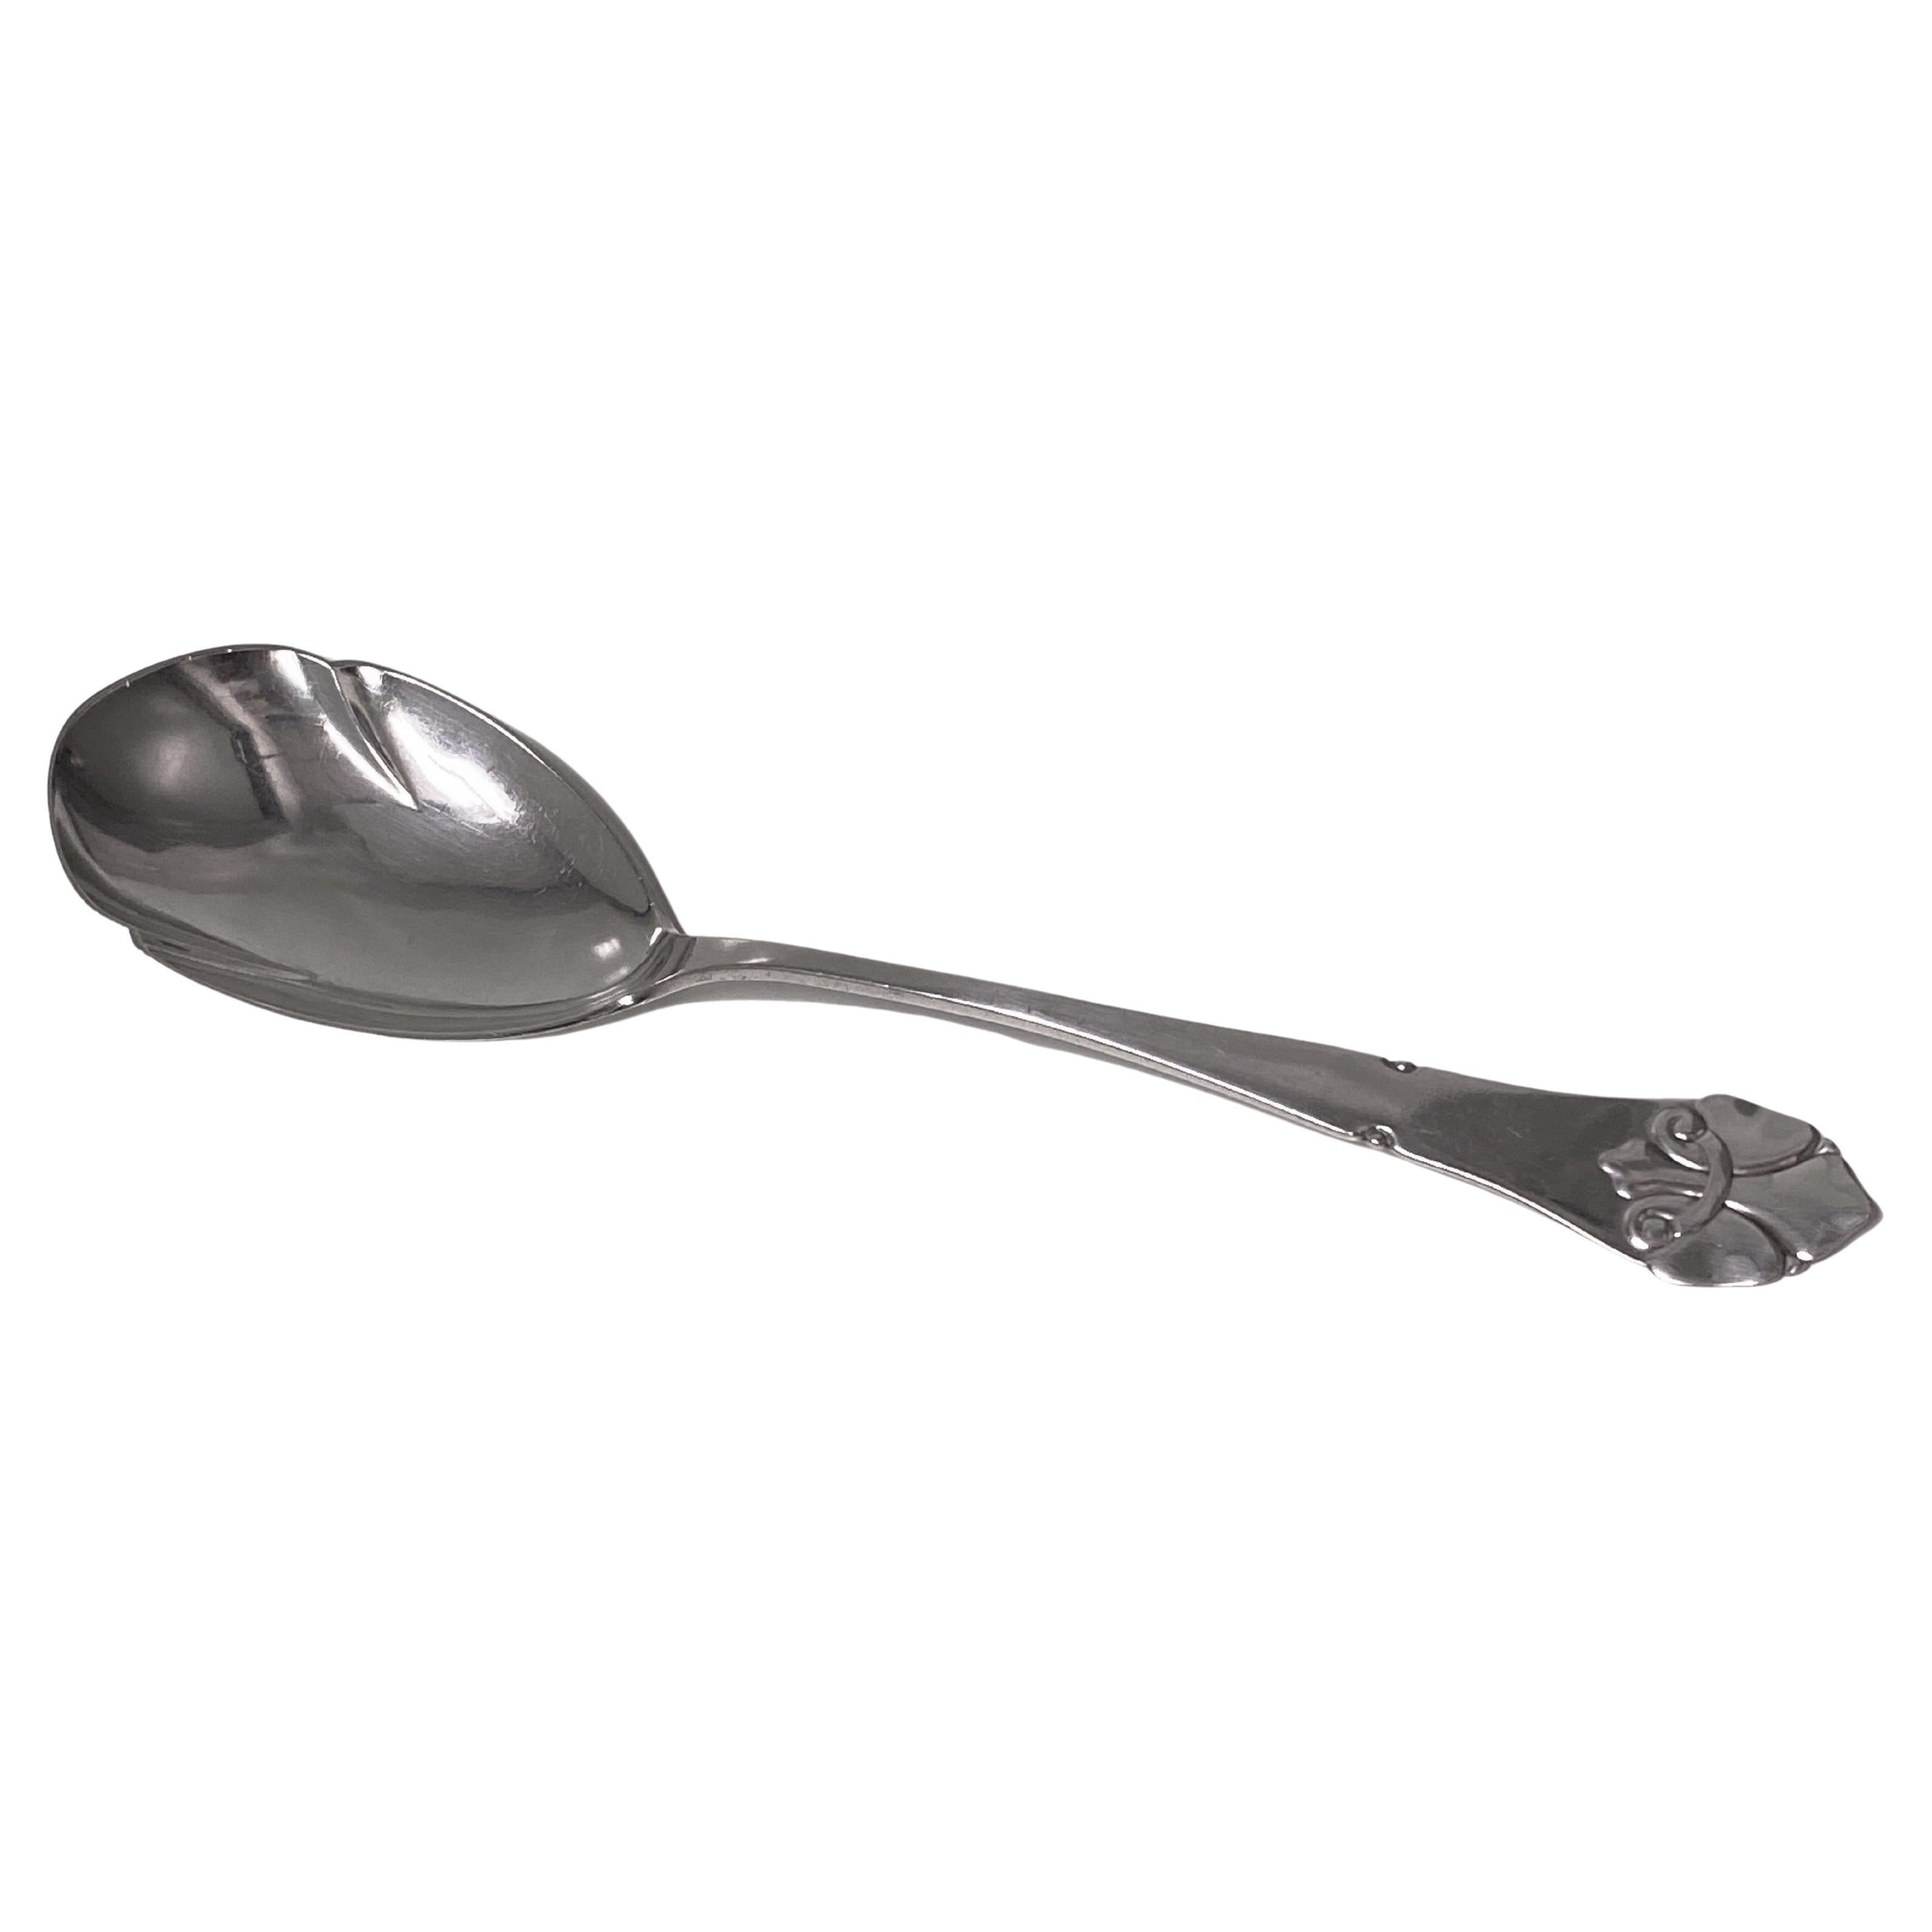 Danish Silver Arts Crafts Nouveau style Serving Spoon 1925 For Sale